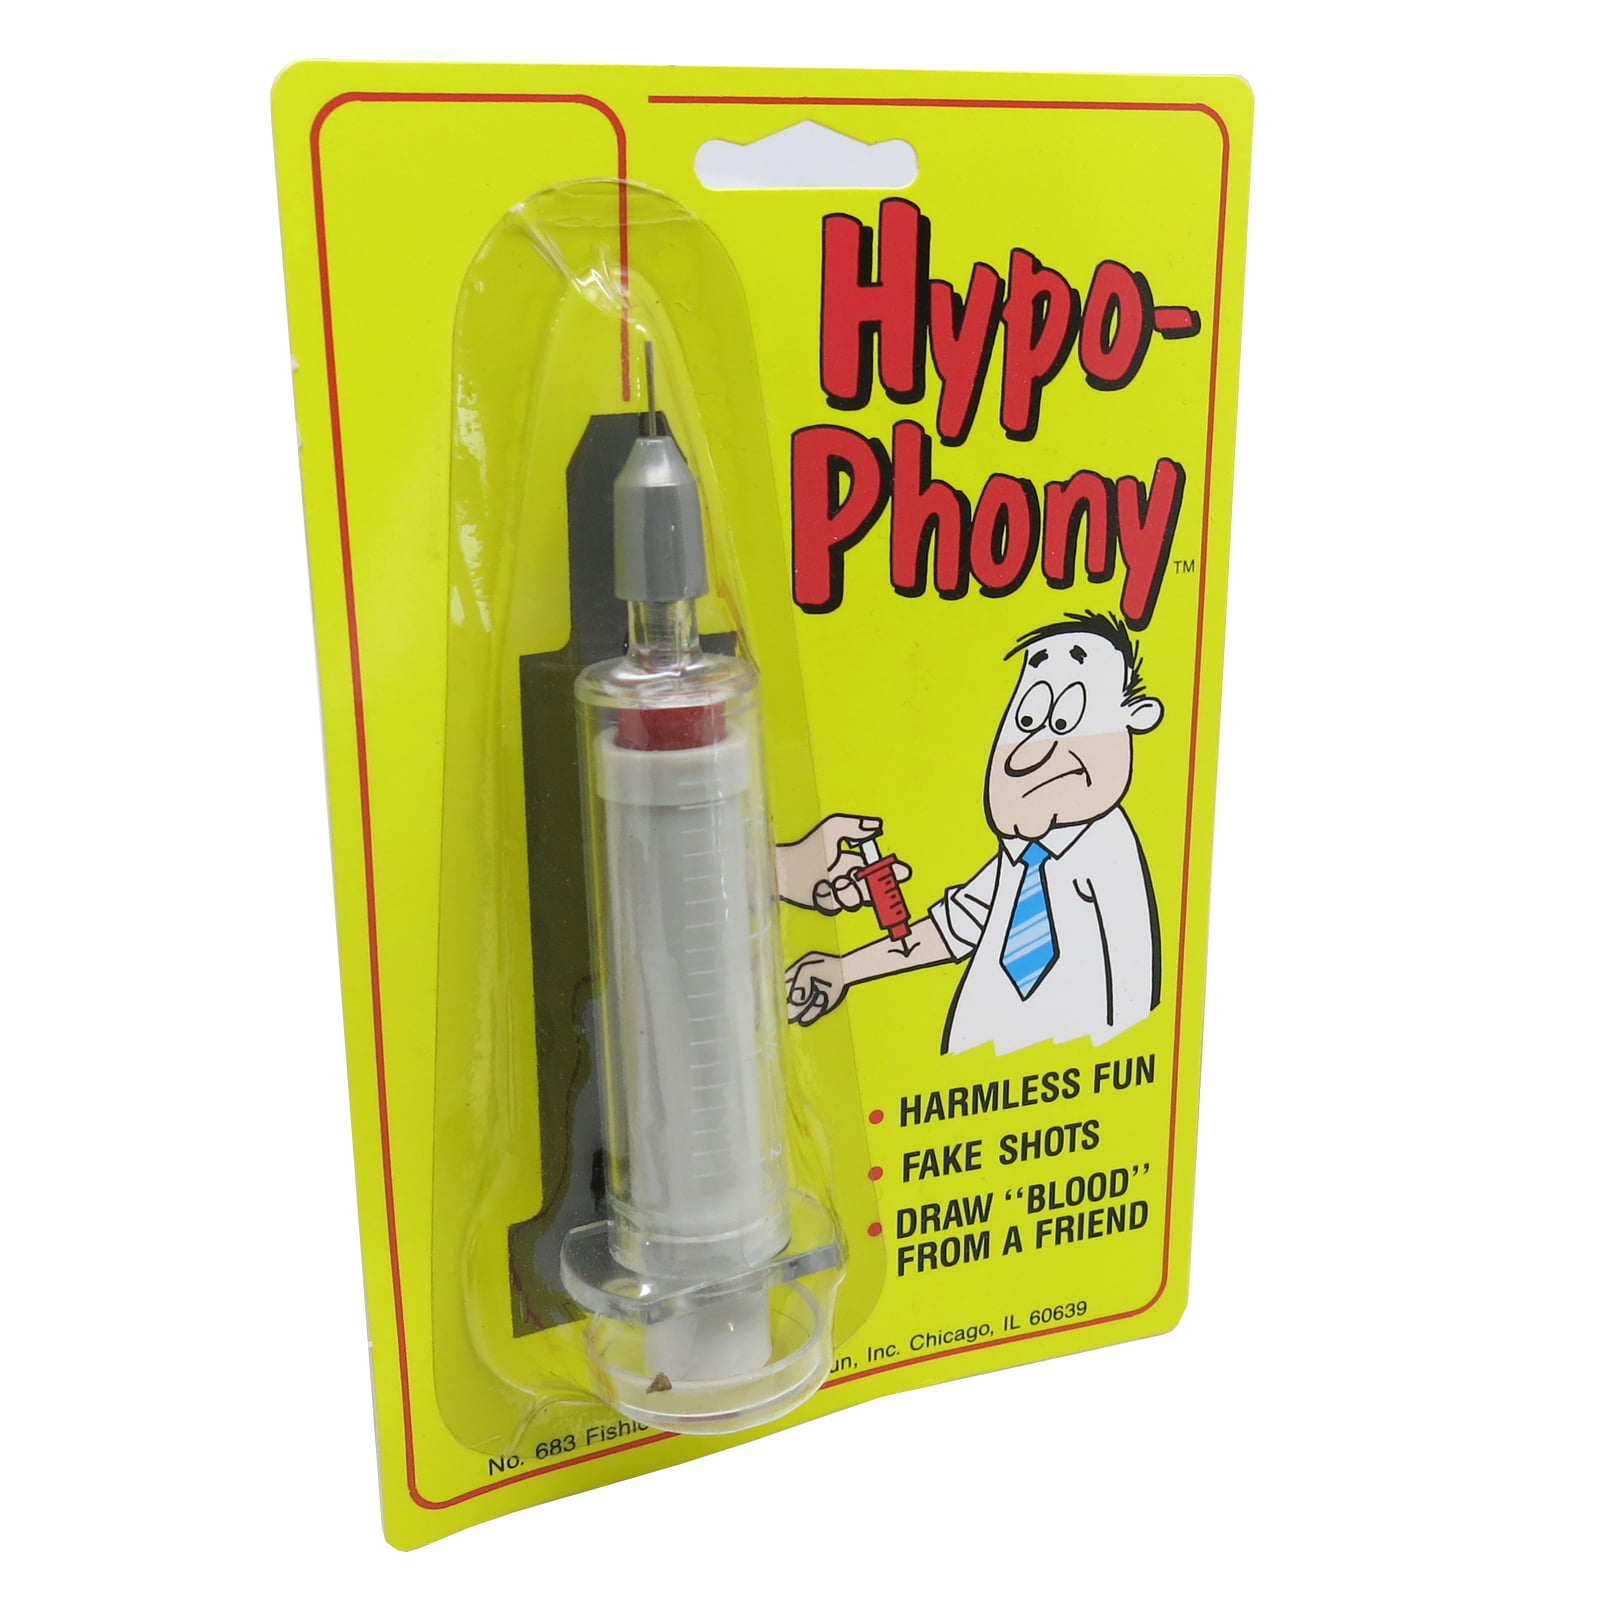 Hypo-phony - Fake Hypodermic Needle Is Harmless Fun - www.bagssaleusa.com - www.bagssaleusa.com